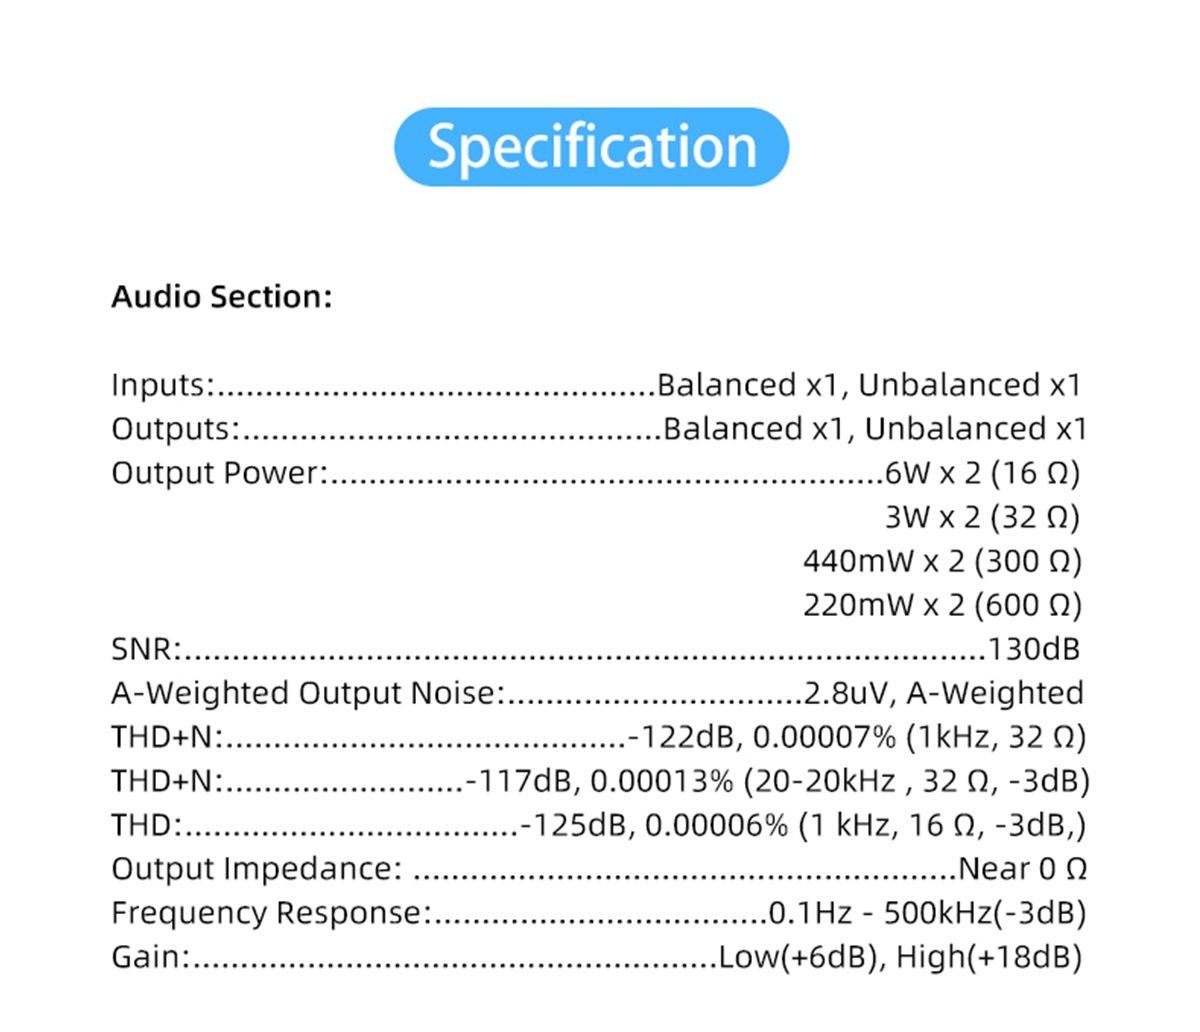 SMSL-SP200-THX-AAA-888-Technology-Stereo-Balanced-Headphone-Amplifier-with-XLR-RCA-Input-1685286